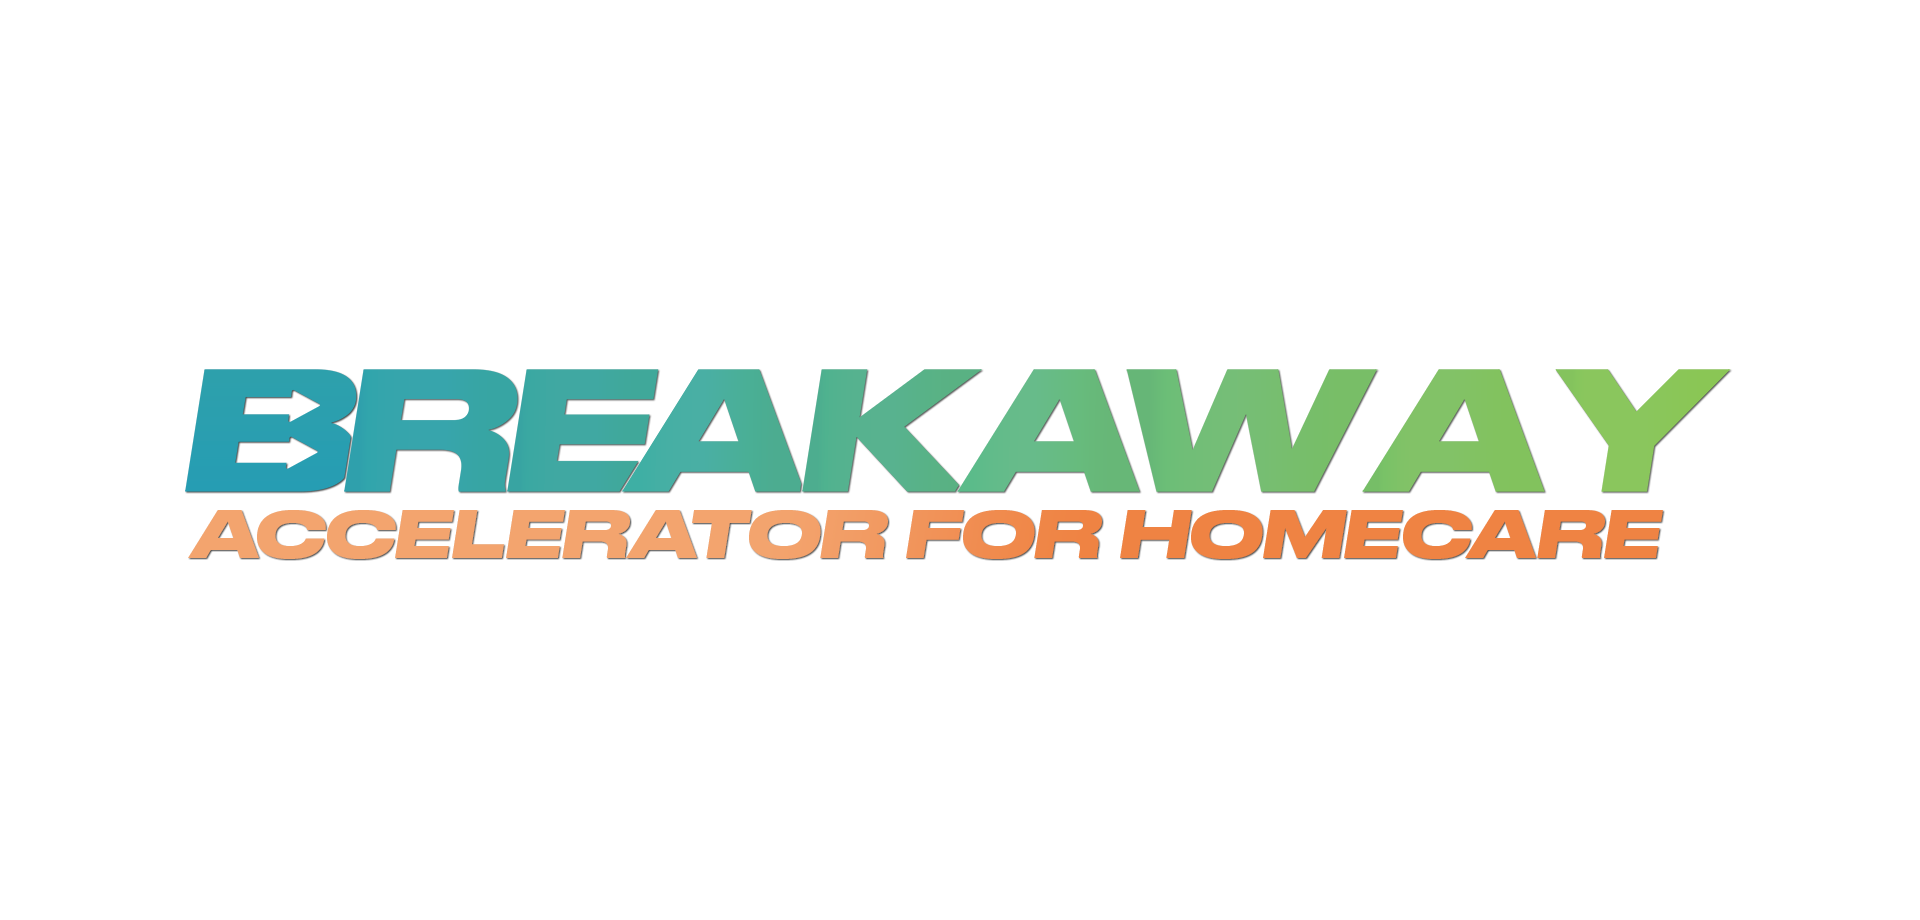 Breakaway Home Care Accelerator Logo